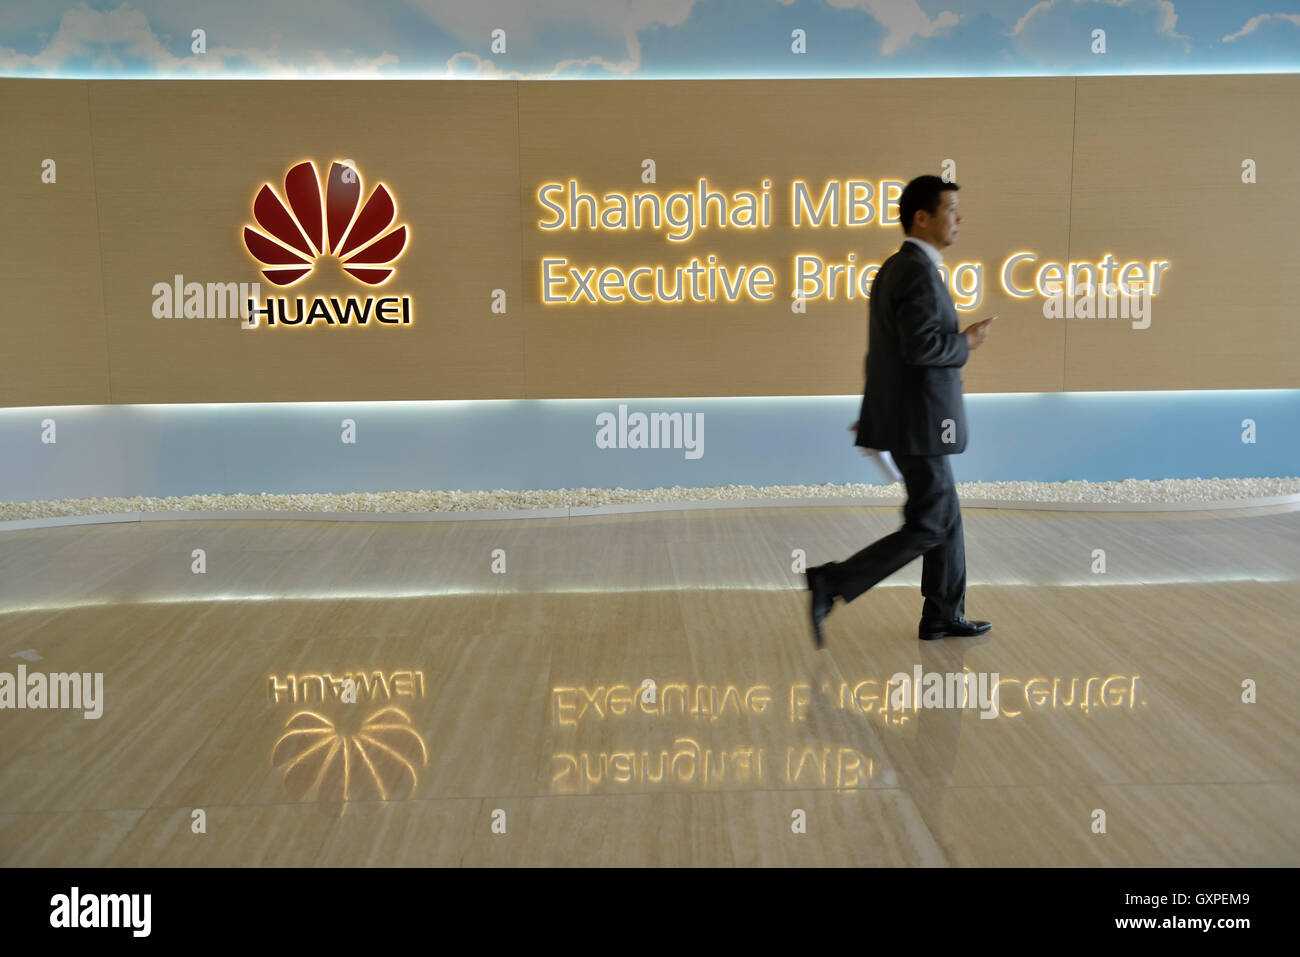 Huawei Shanghai MBB Executive Briefing Center in Shanghai, China. 10-Sep-2016 Stock Photo